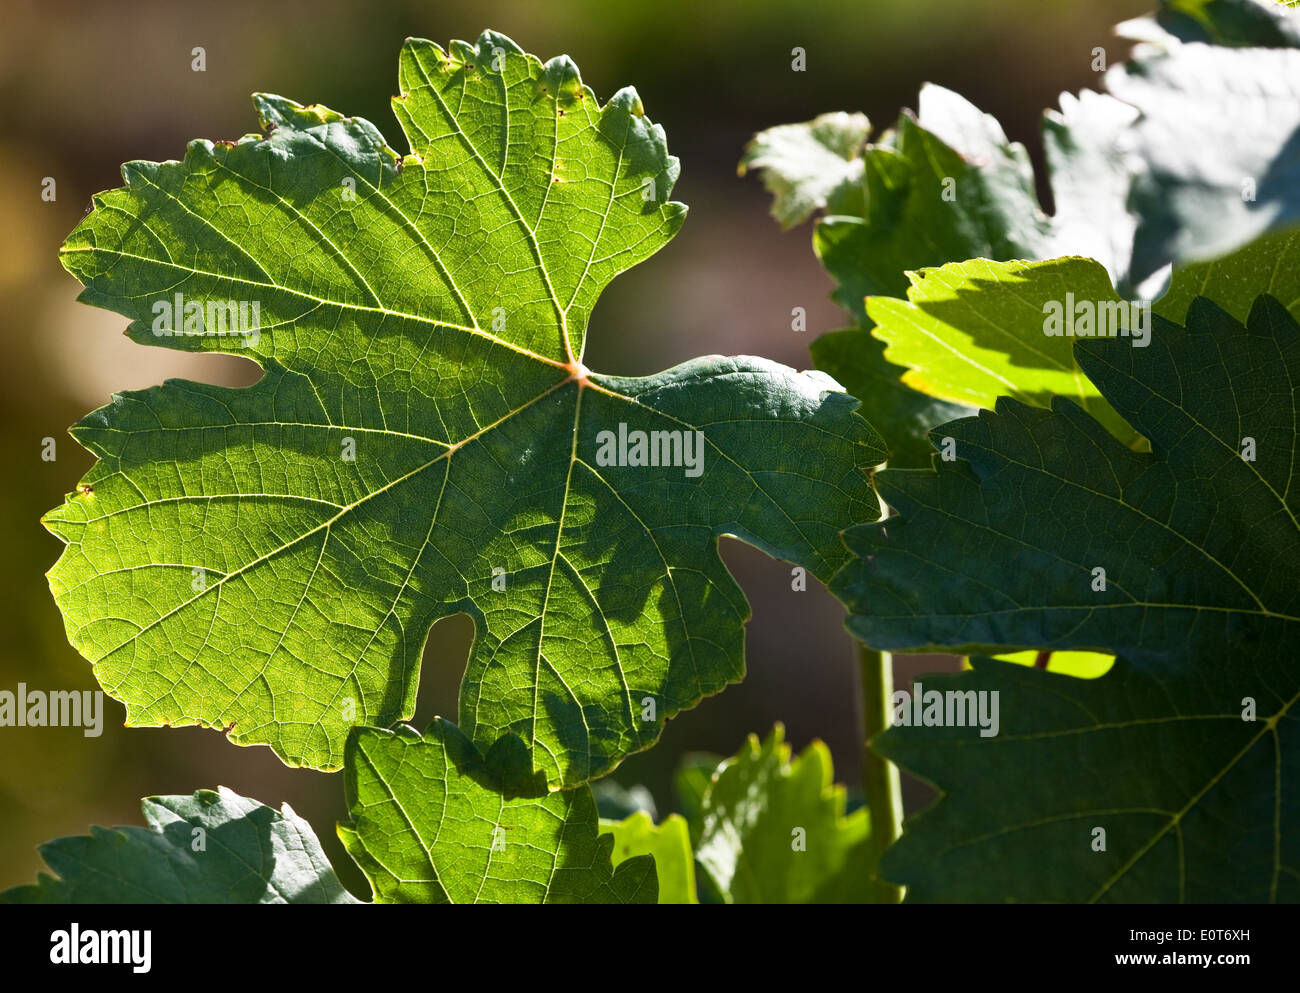 Weinlaub - foliage of vines Stock Photo